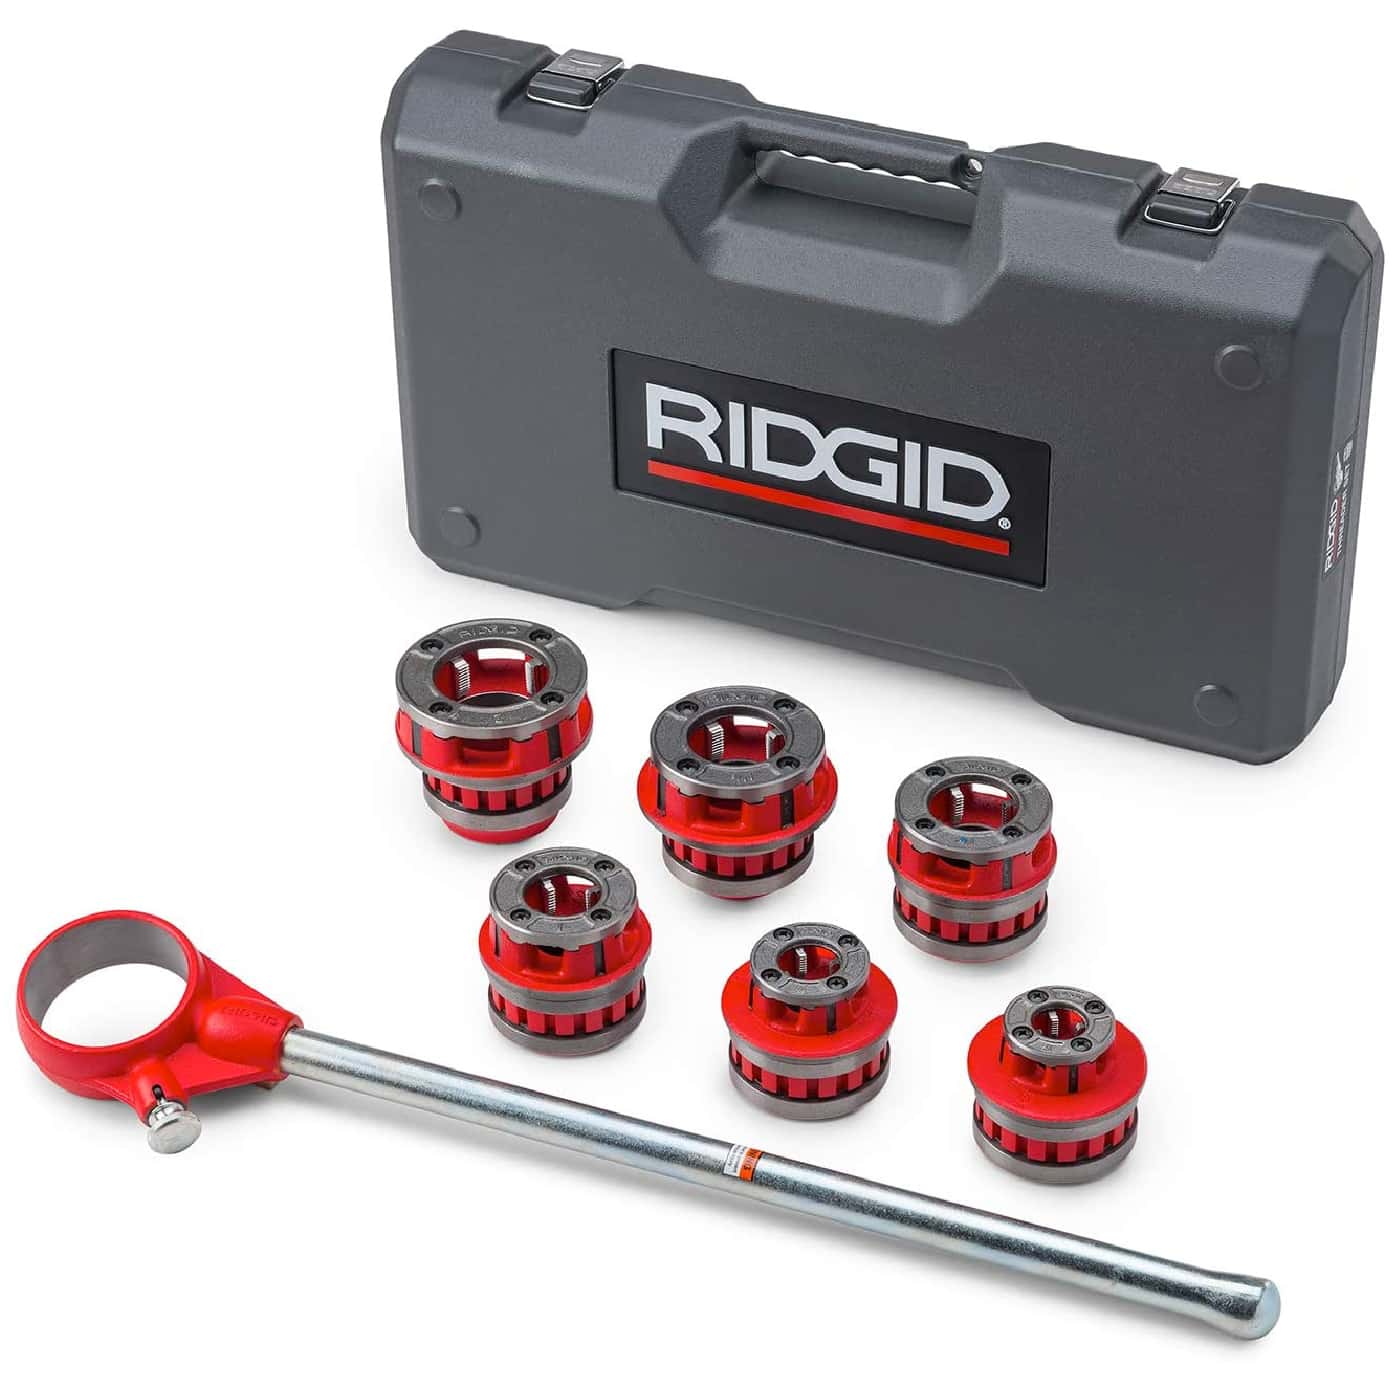 RID36505 - Tarraja Manual Ridgid 36505 De 1/8-2 - RIDGID